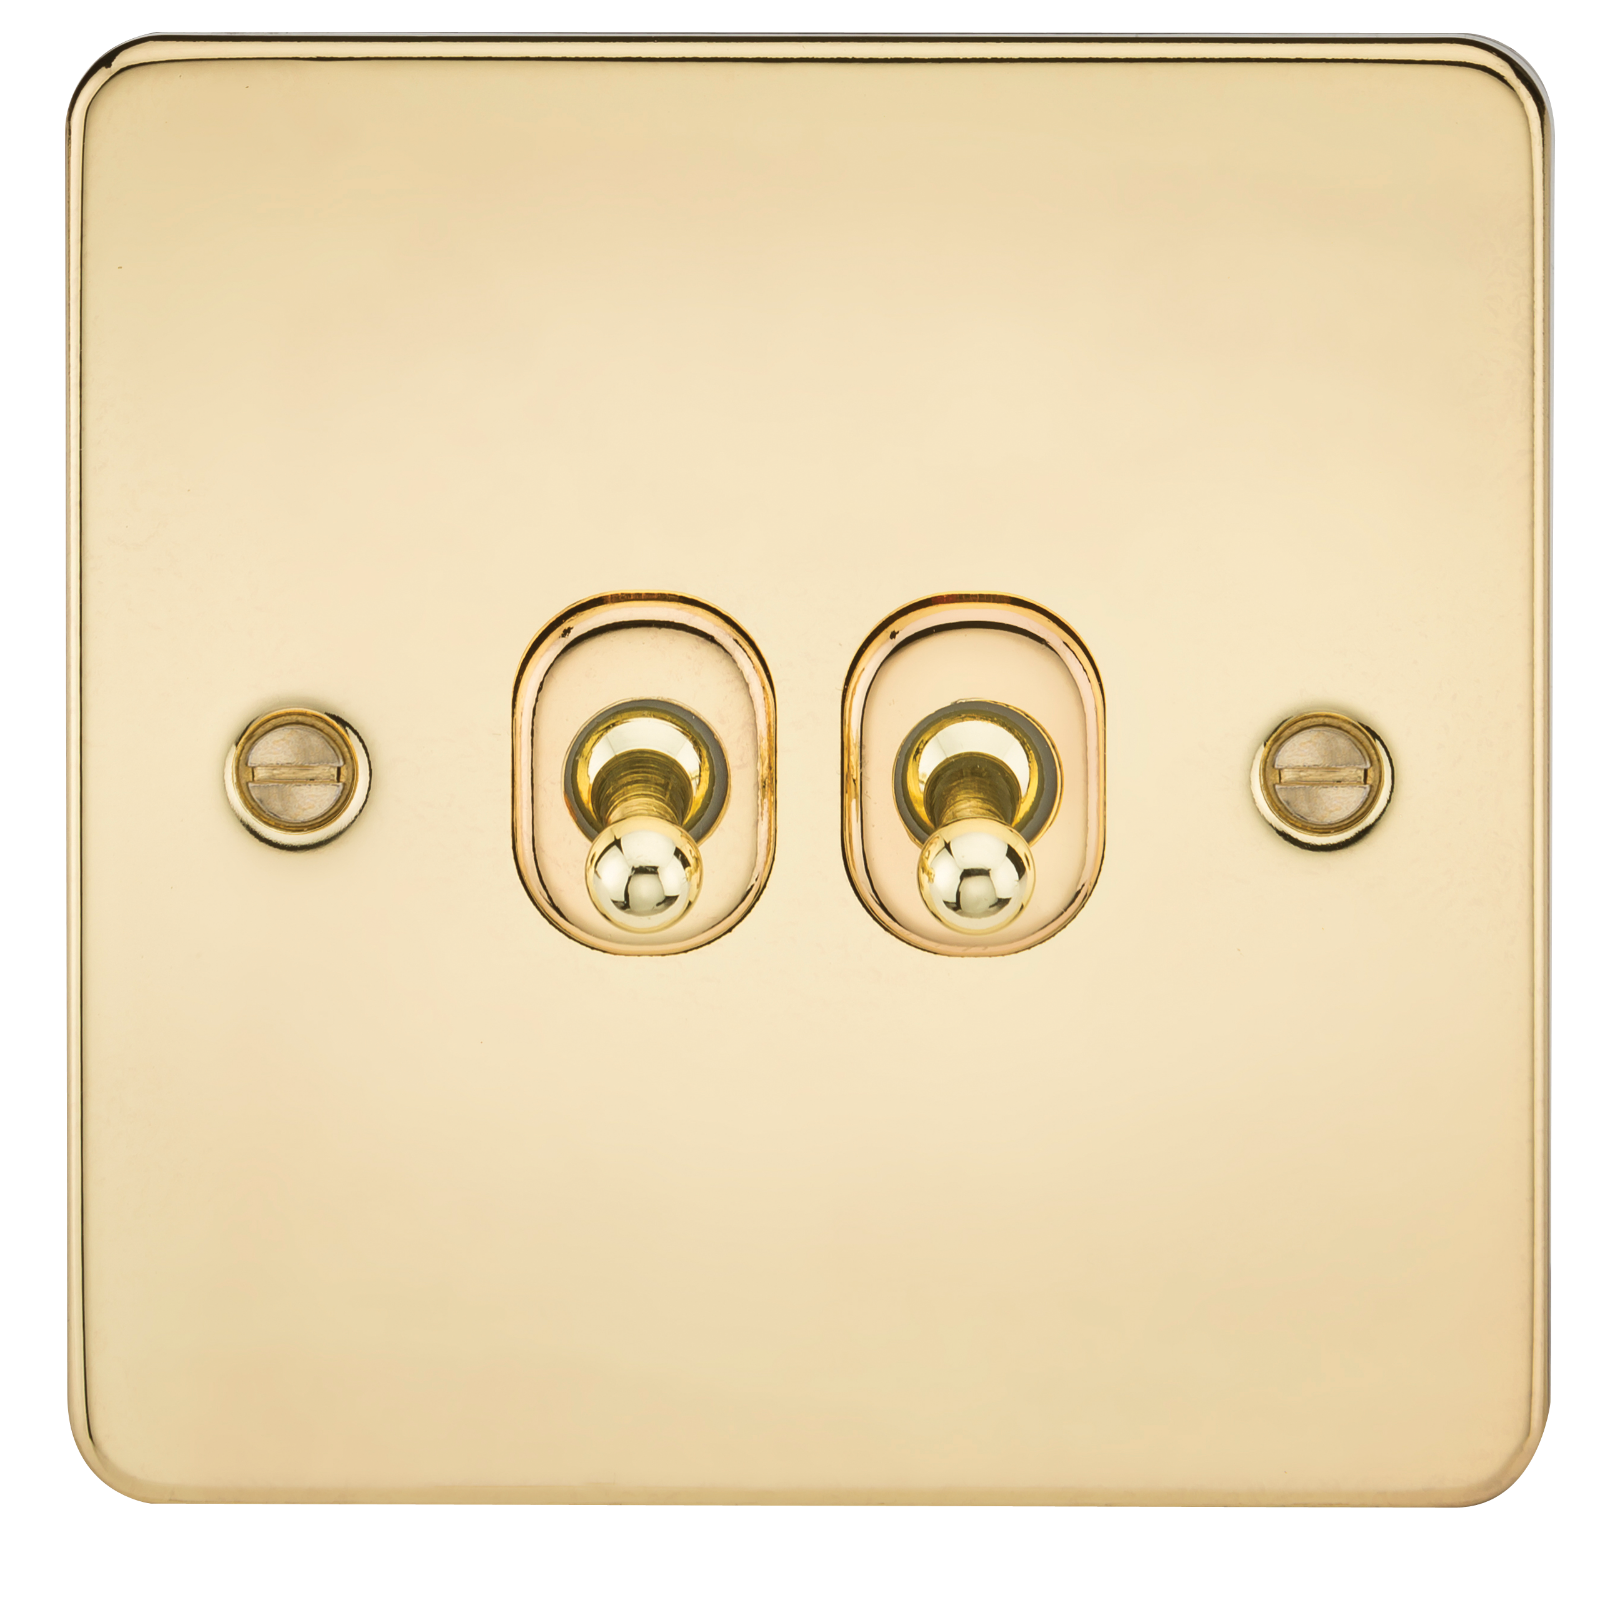 Flat Plate 10A 2G 2-way Toggle Switch - Polished Brass - FP2TOGPB 